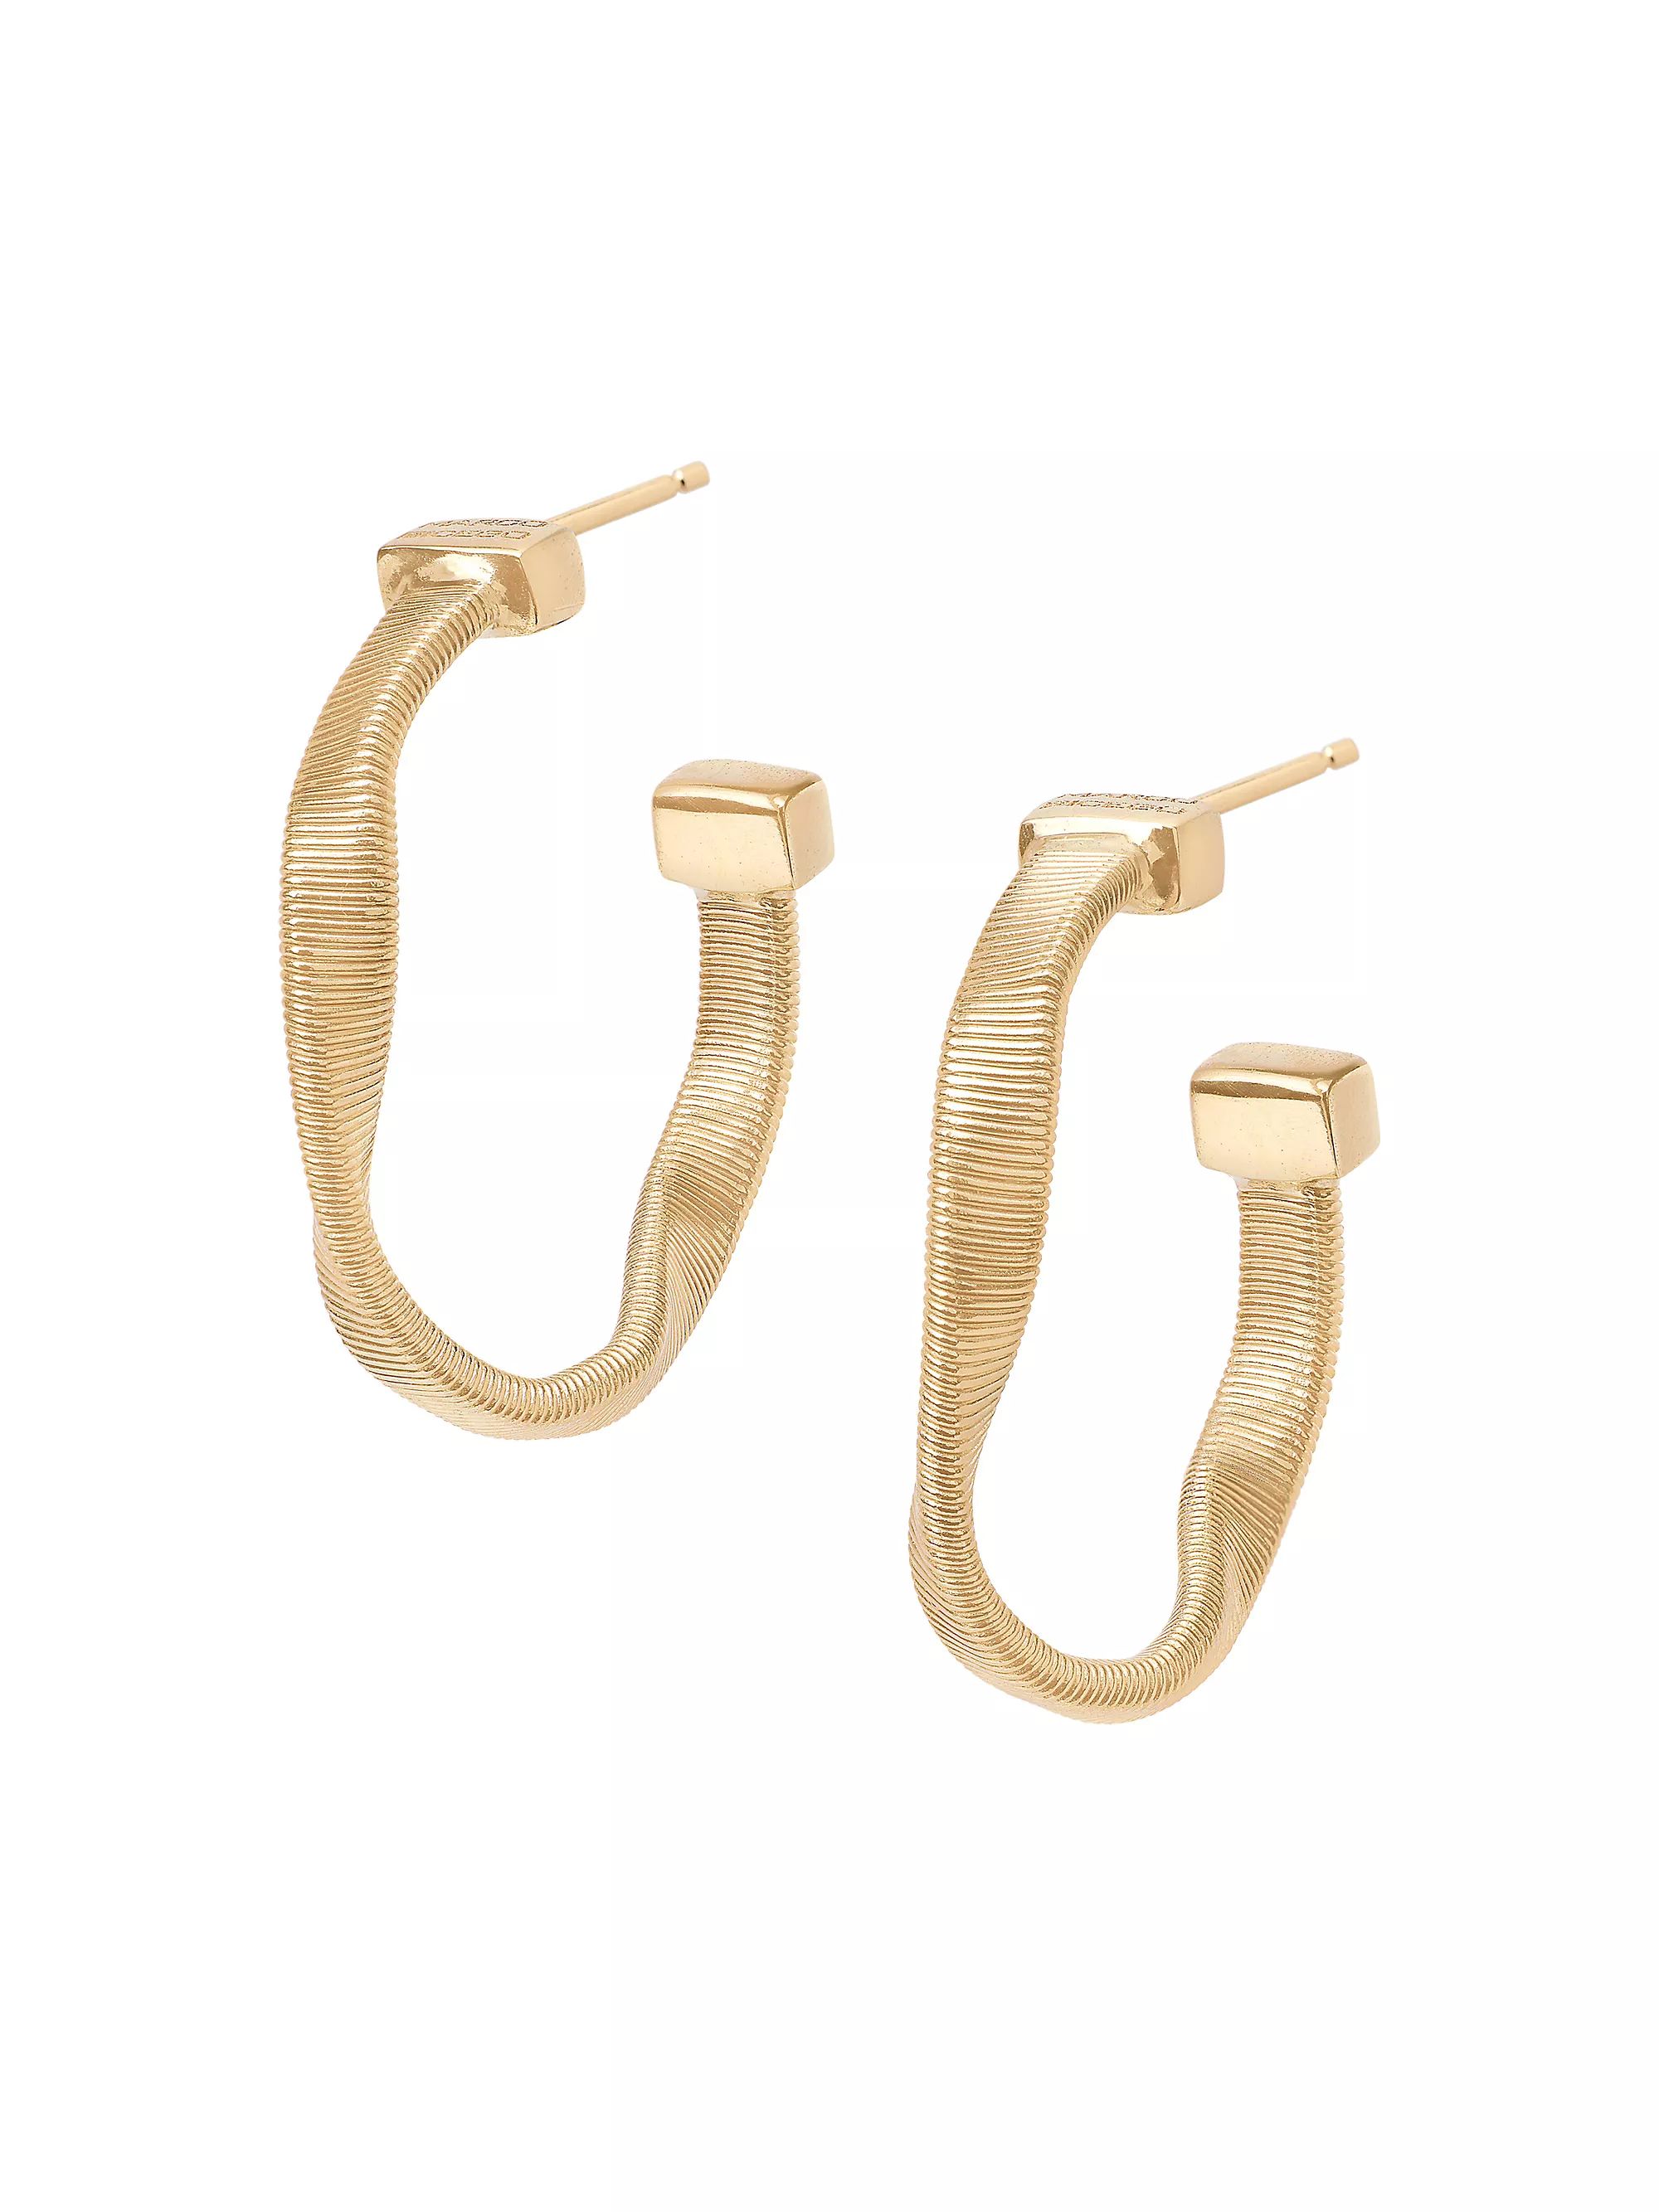 Shop Marco Bicego Marrakech 18K Yellow Gold Small Twisted Hoop Earrings | Saks Fifth Avenue | Saks Fifth Avenue